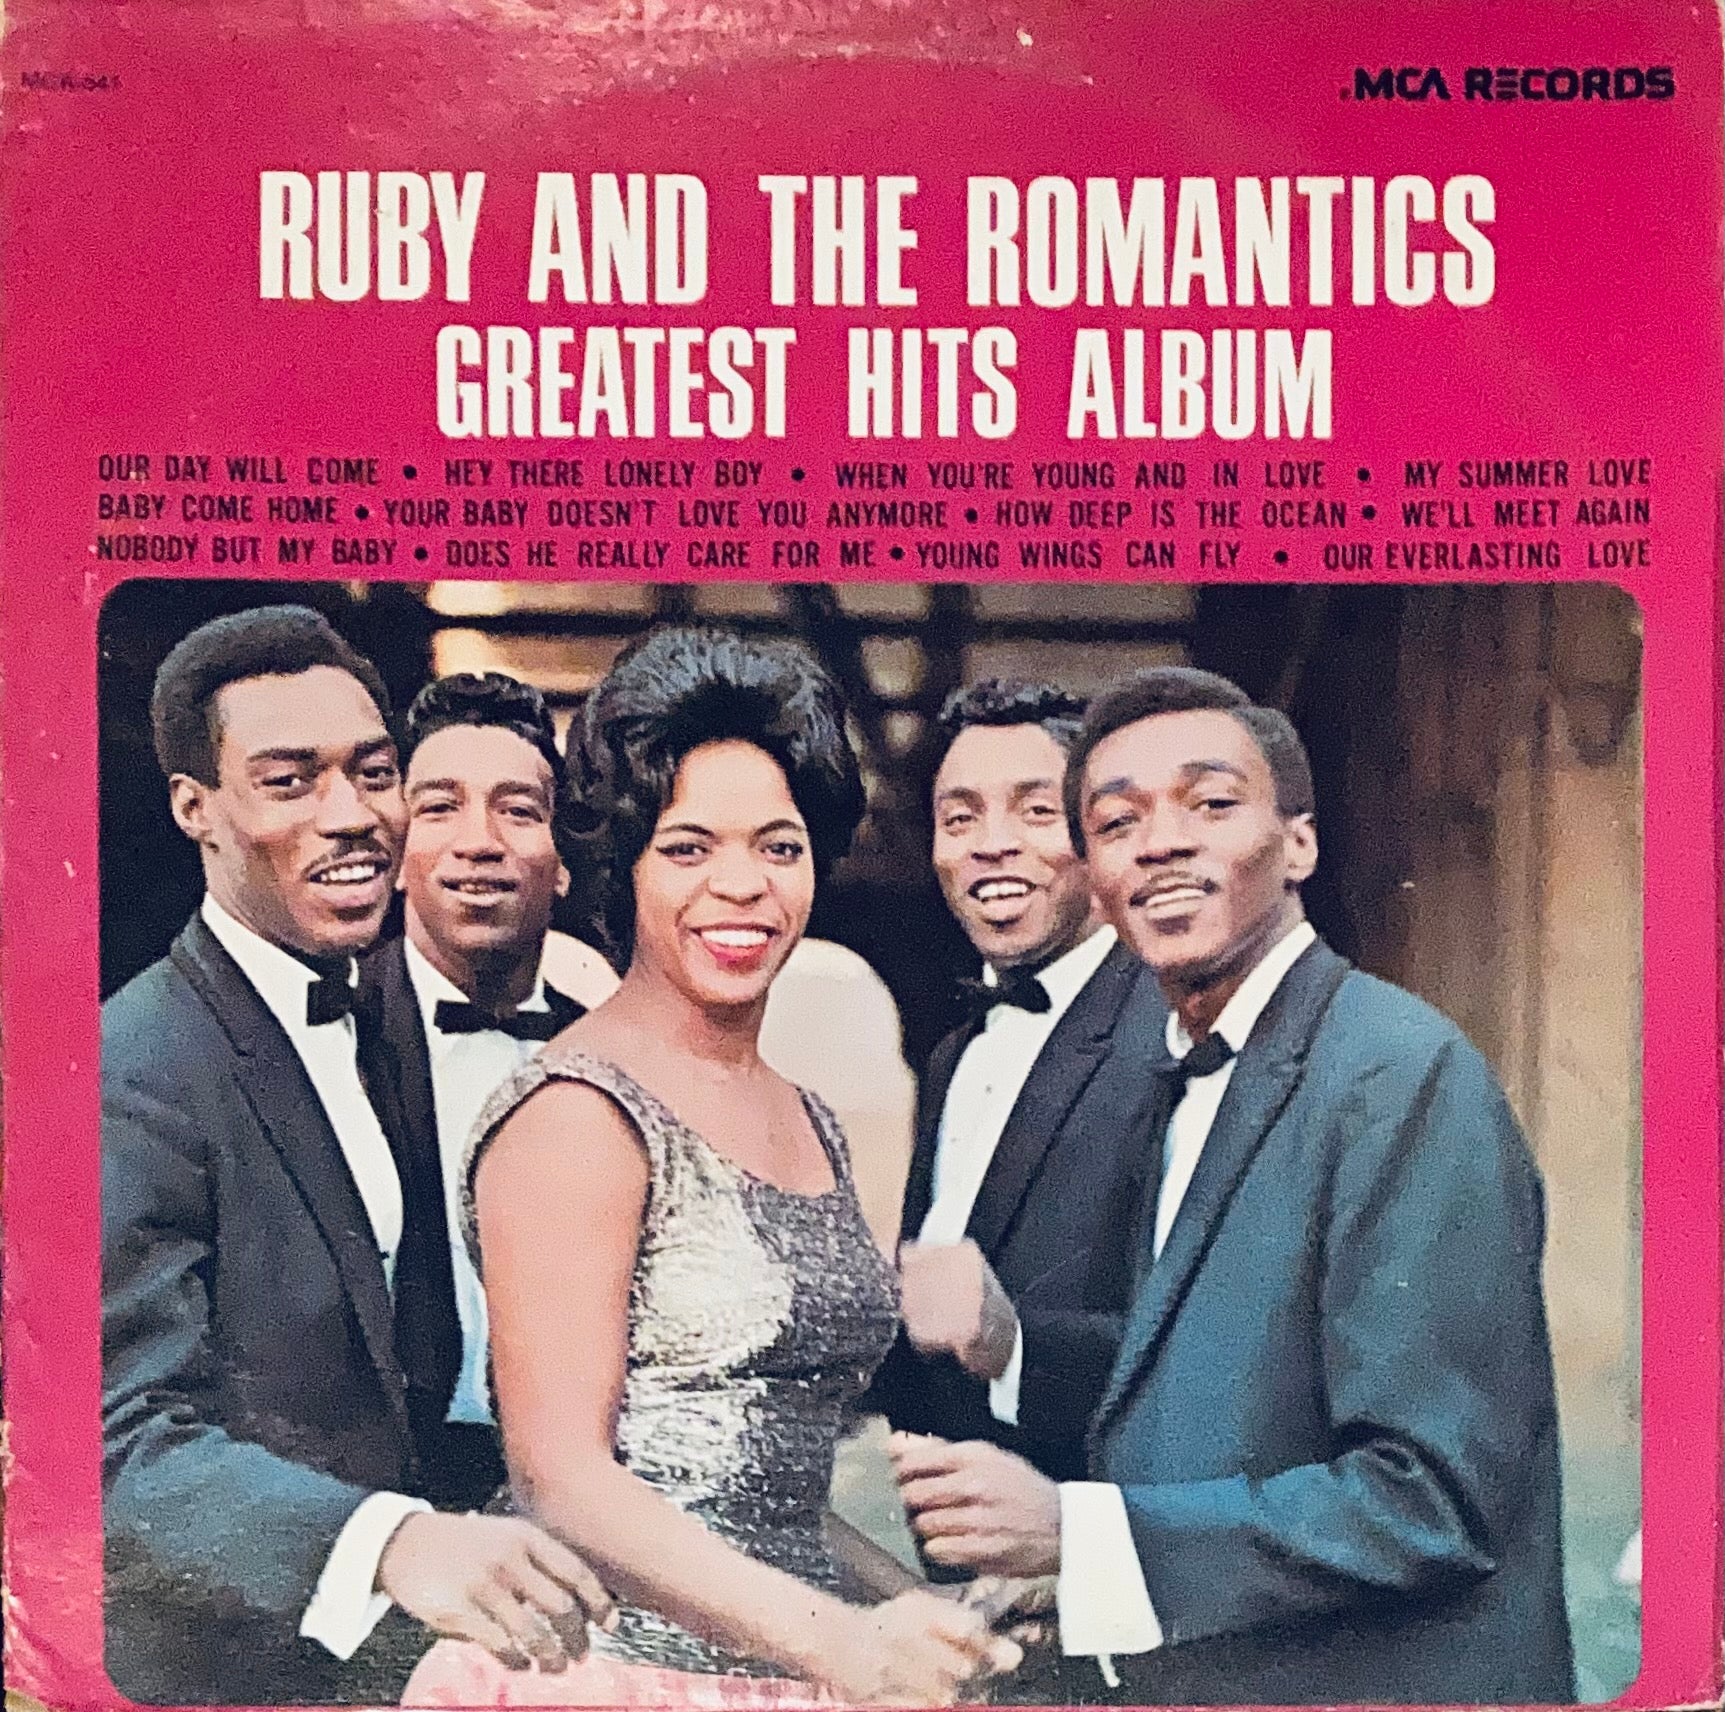 Ruby And The Romantics “Greatest Hits Album” LP (1977)